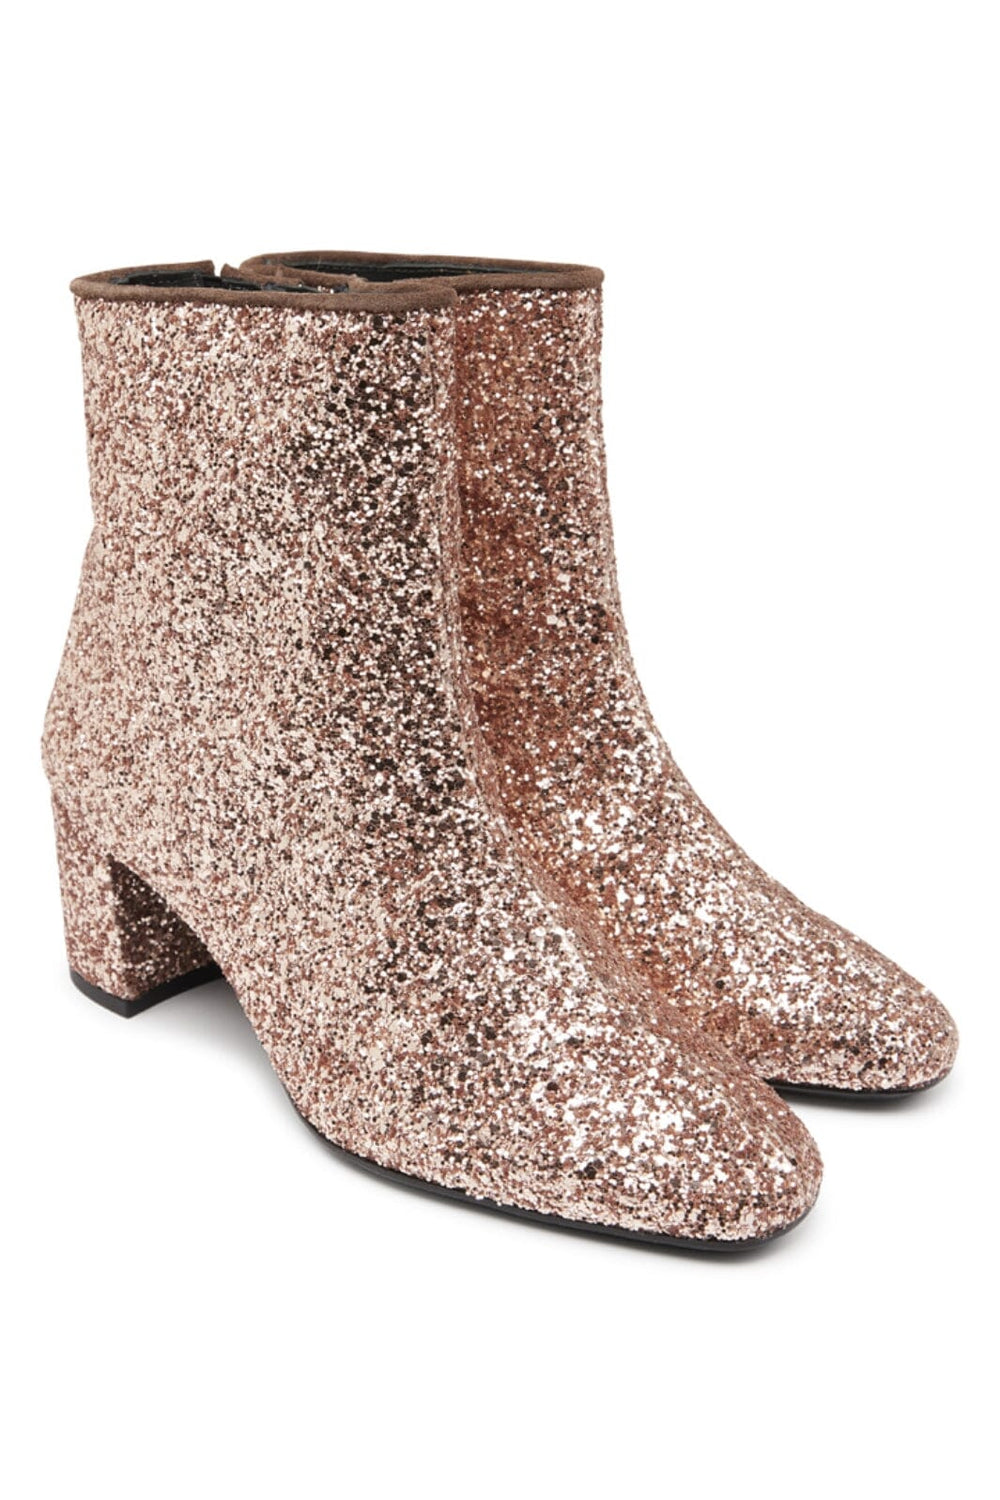 Angulus - Bootie- block heel -with zipper - 1708/1753 Maple Glitter/Taupe Støvletter 